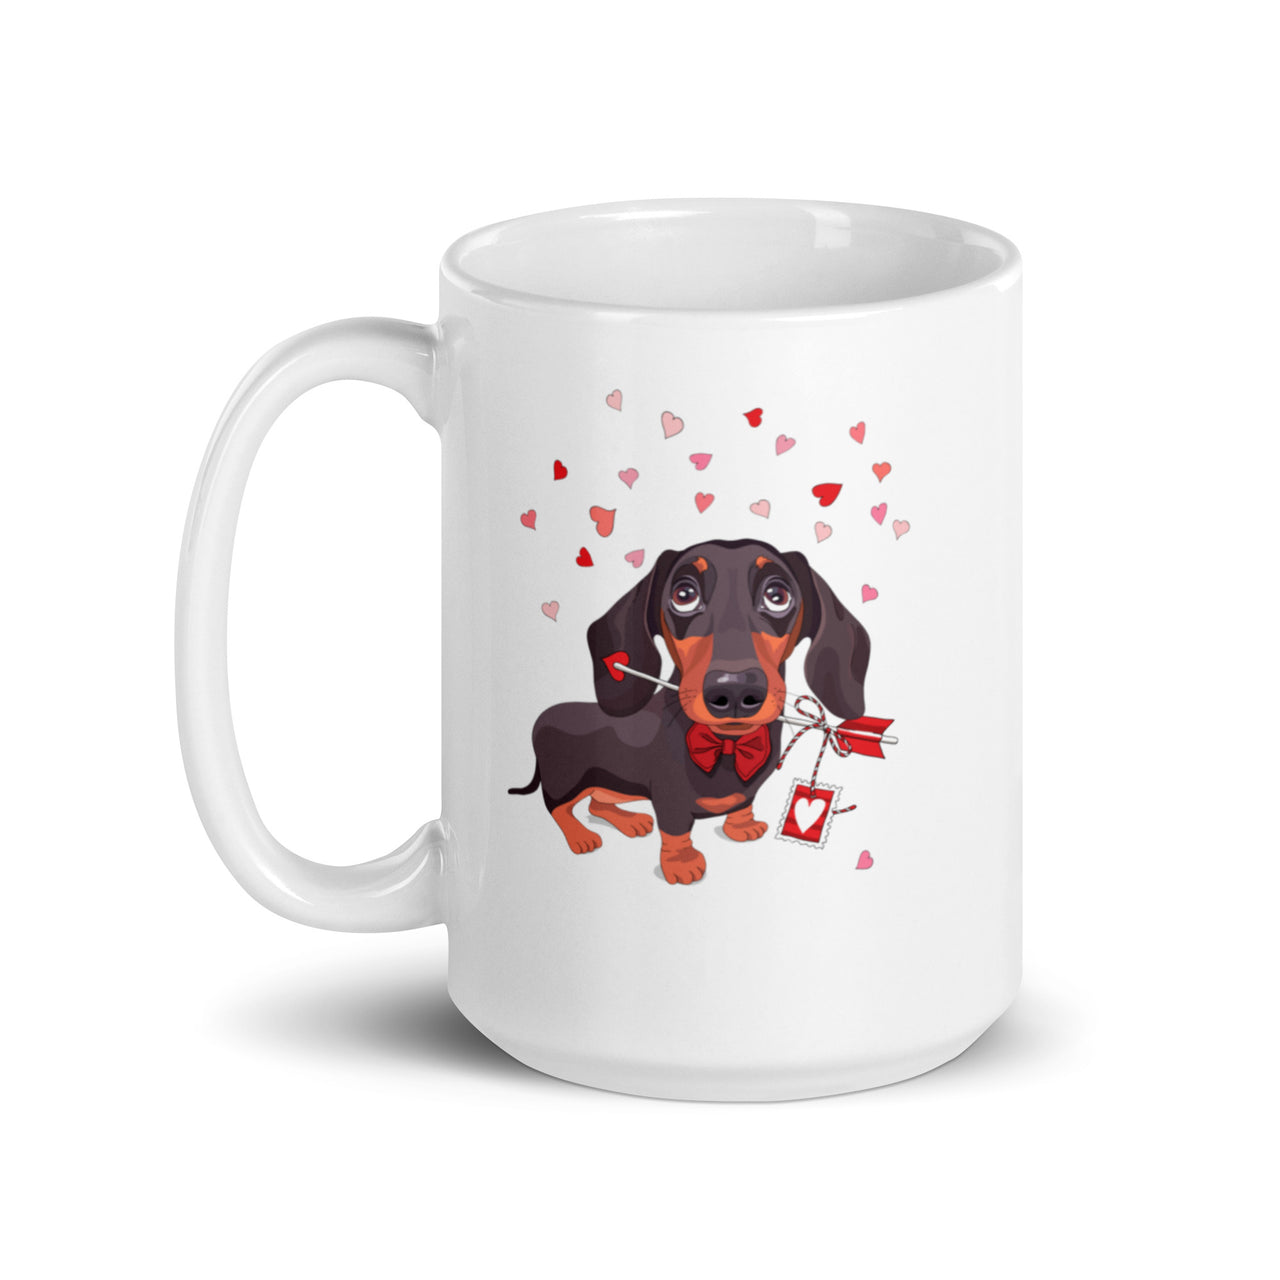 Love Mug with Cute Dachshund